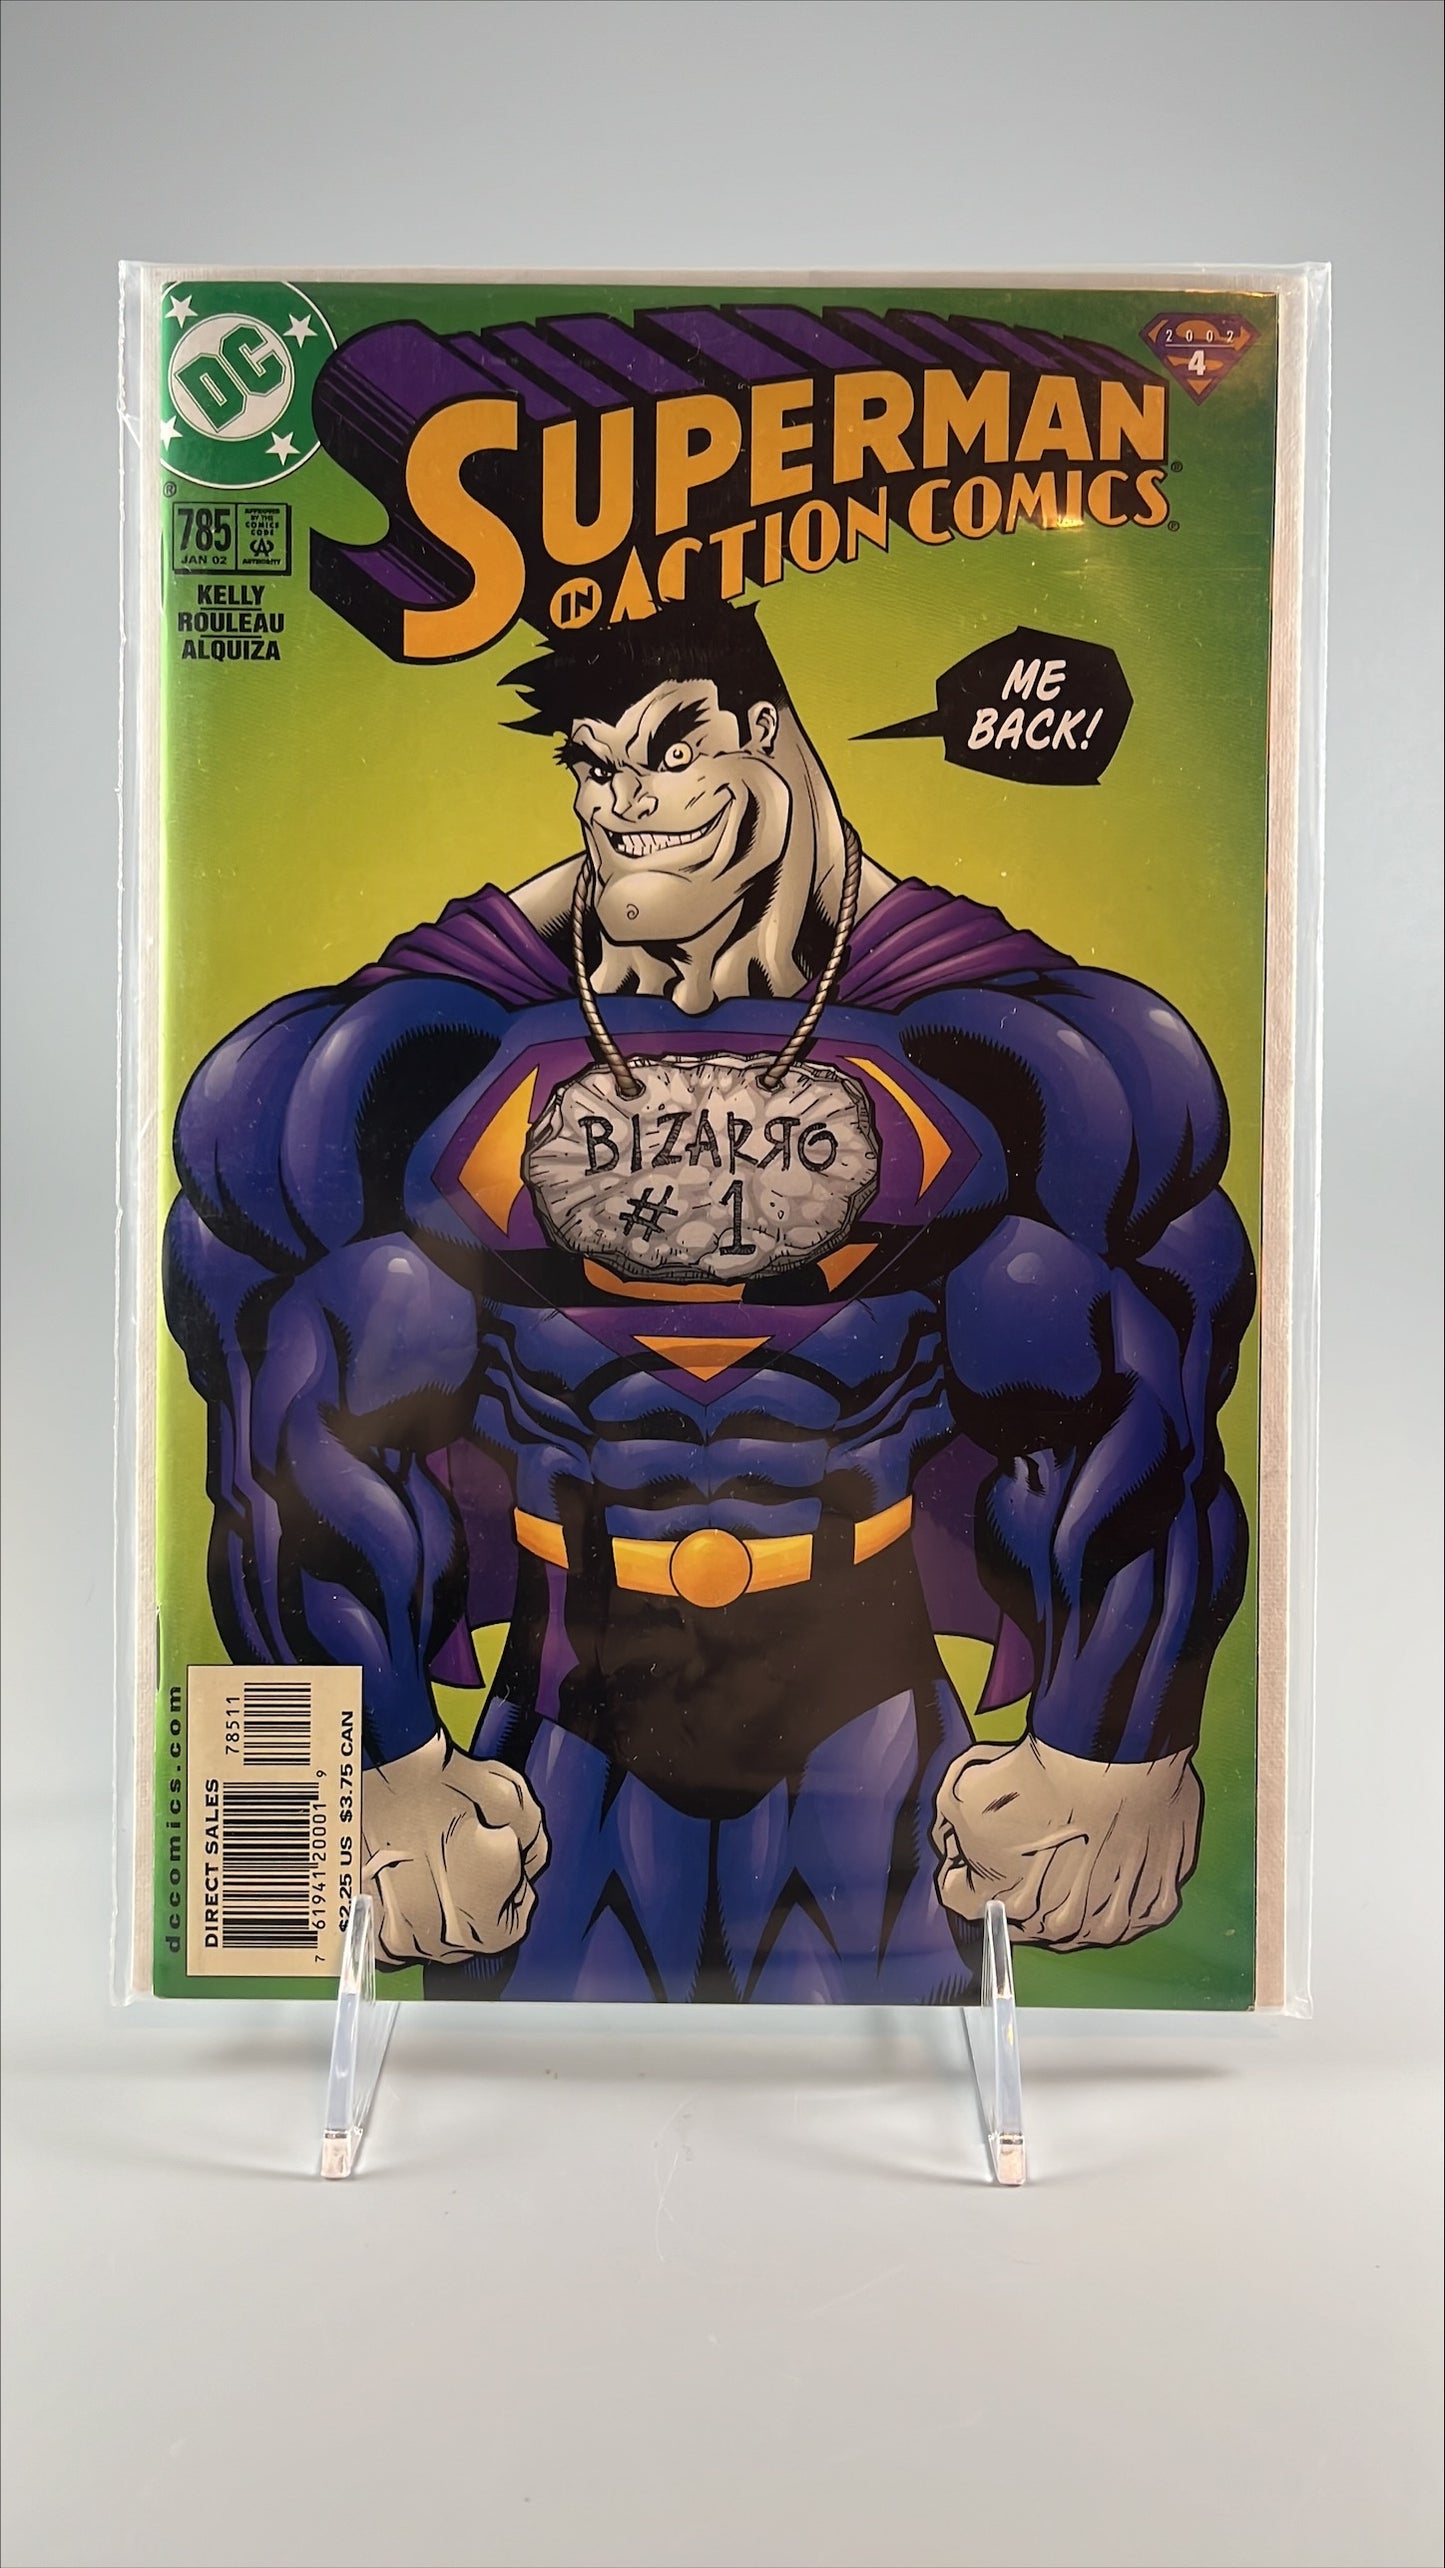 Superman in Action Comics #785